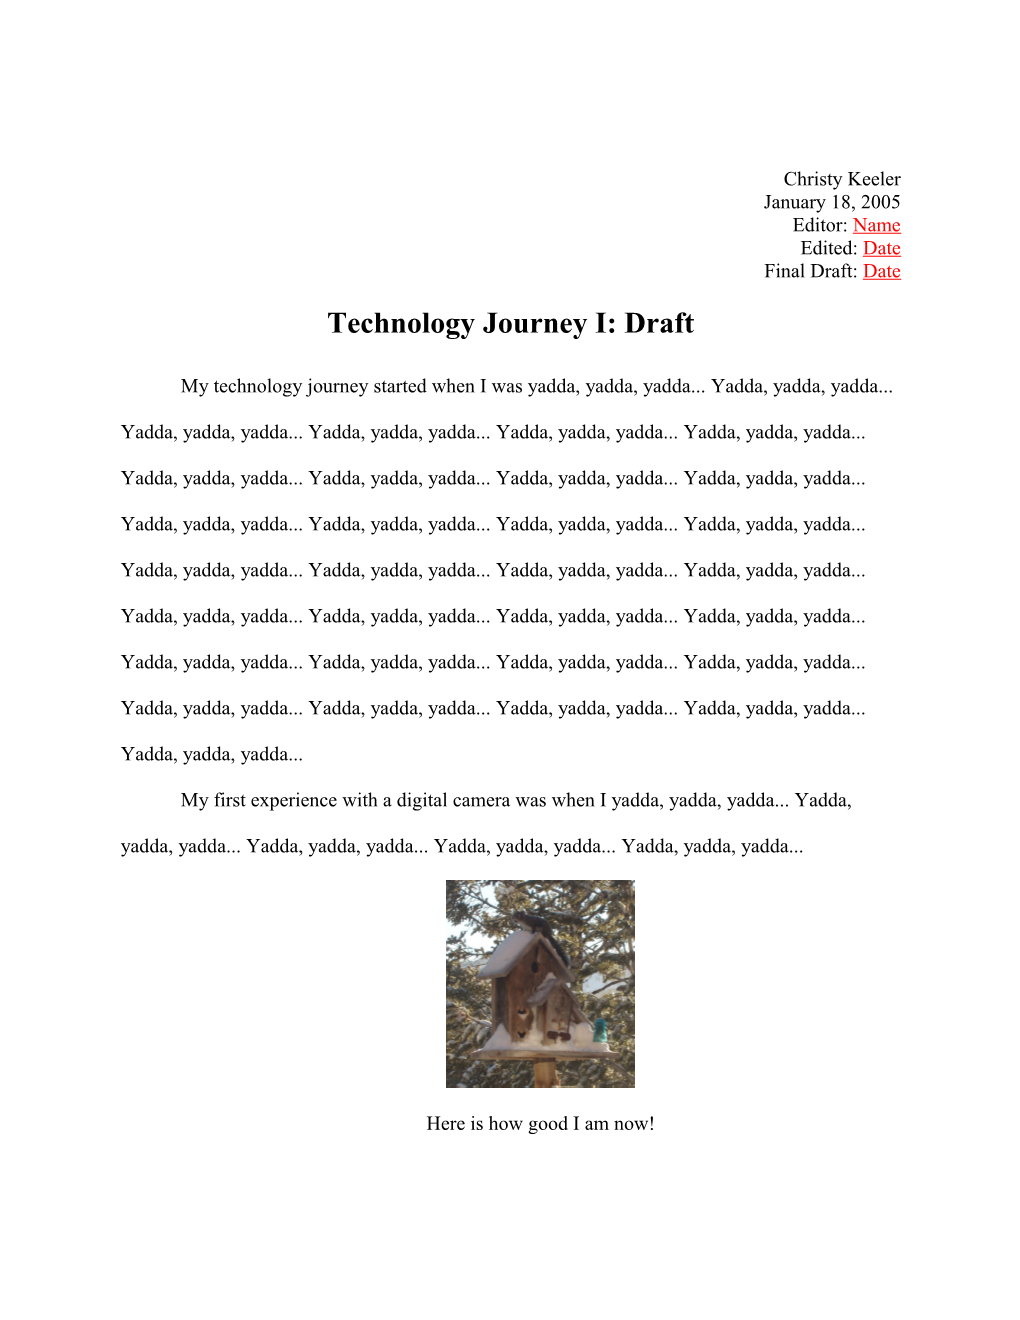 Technology Journey I: Draft